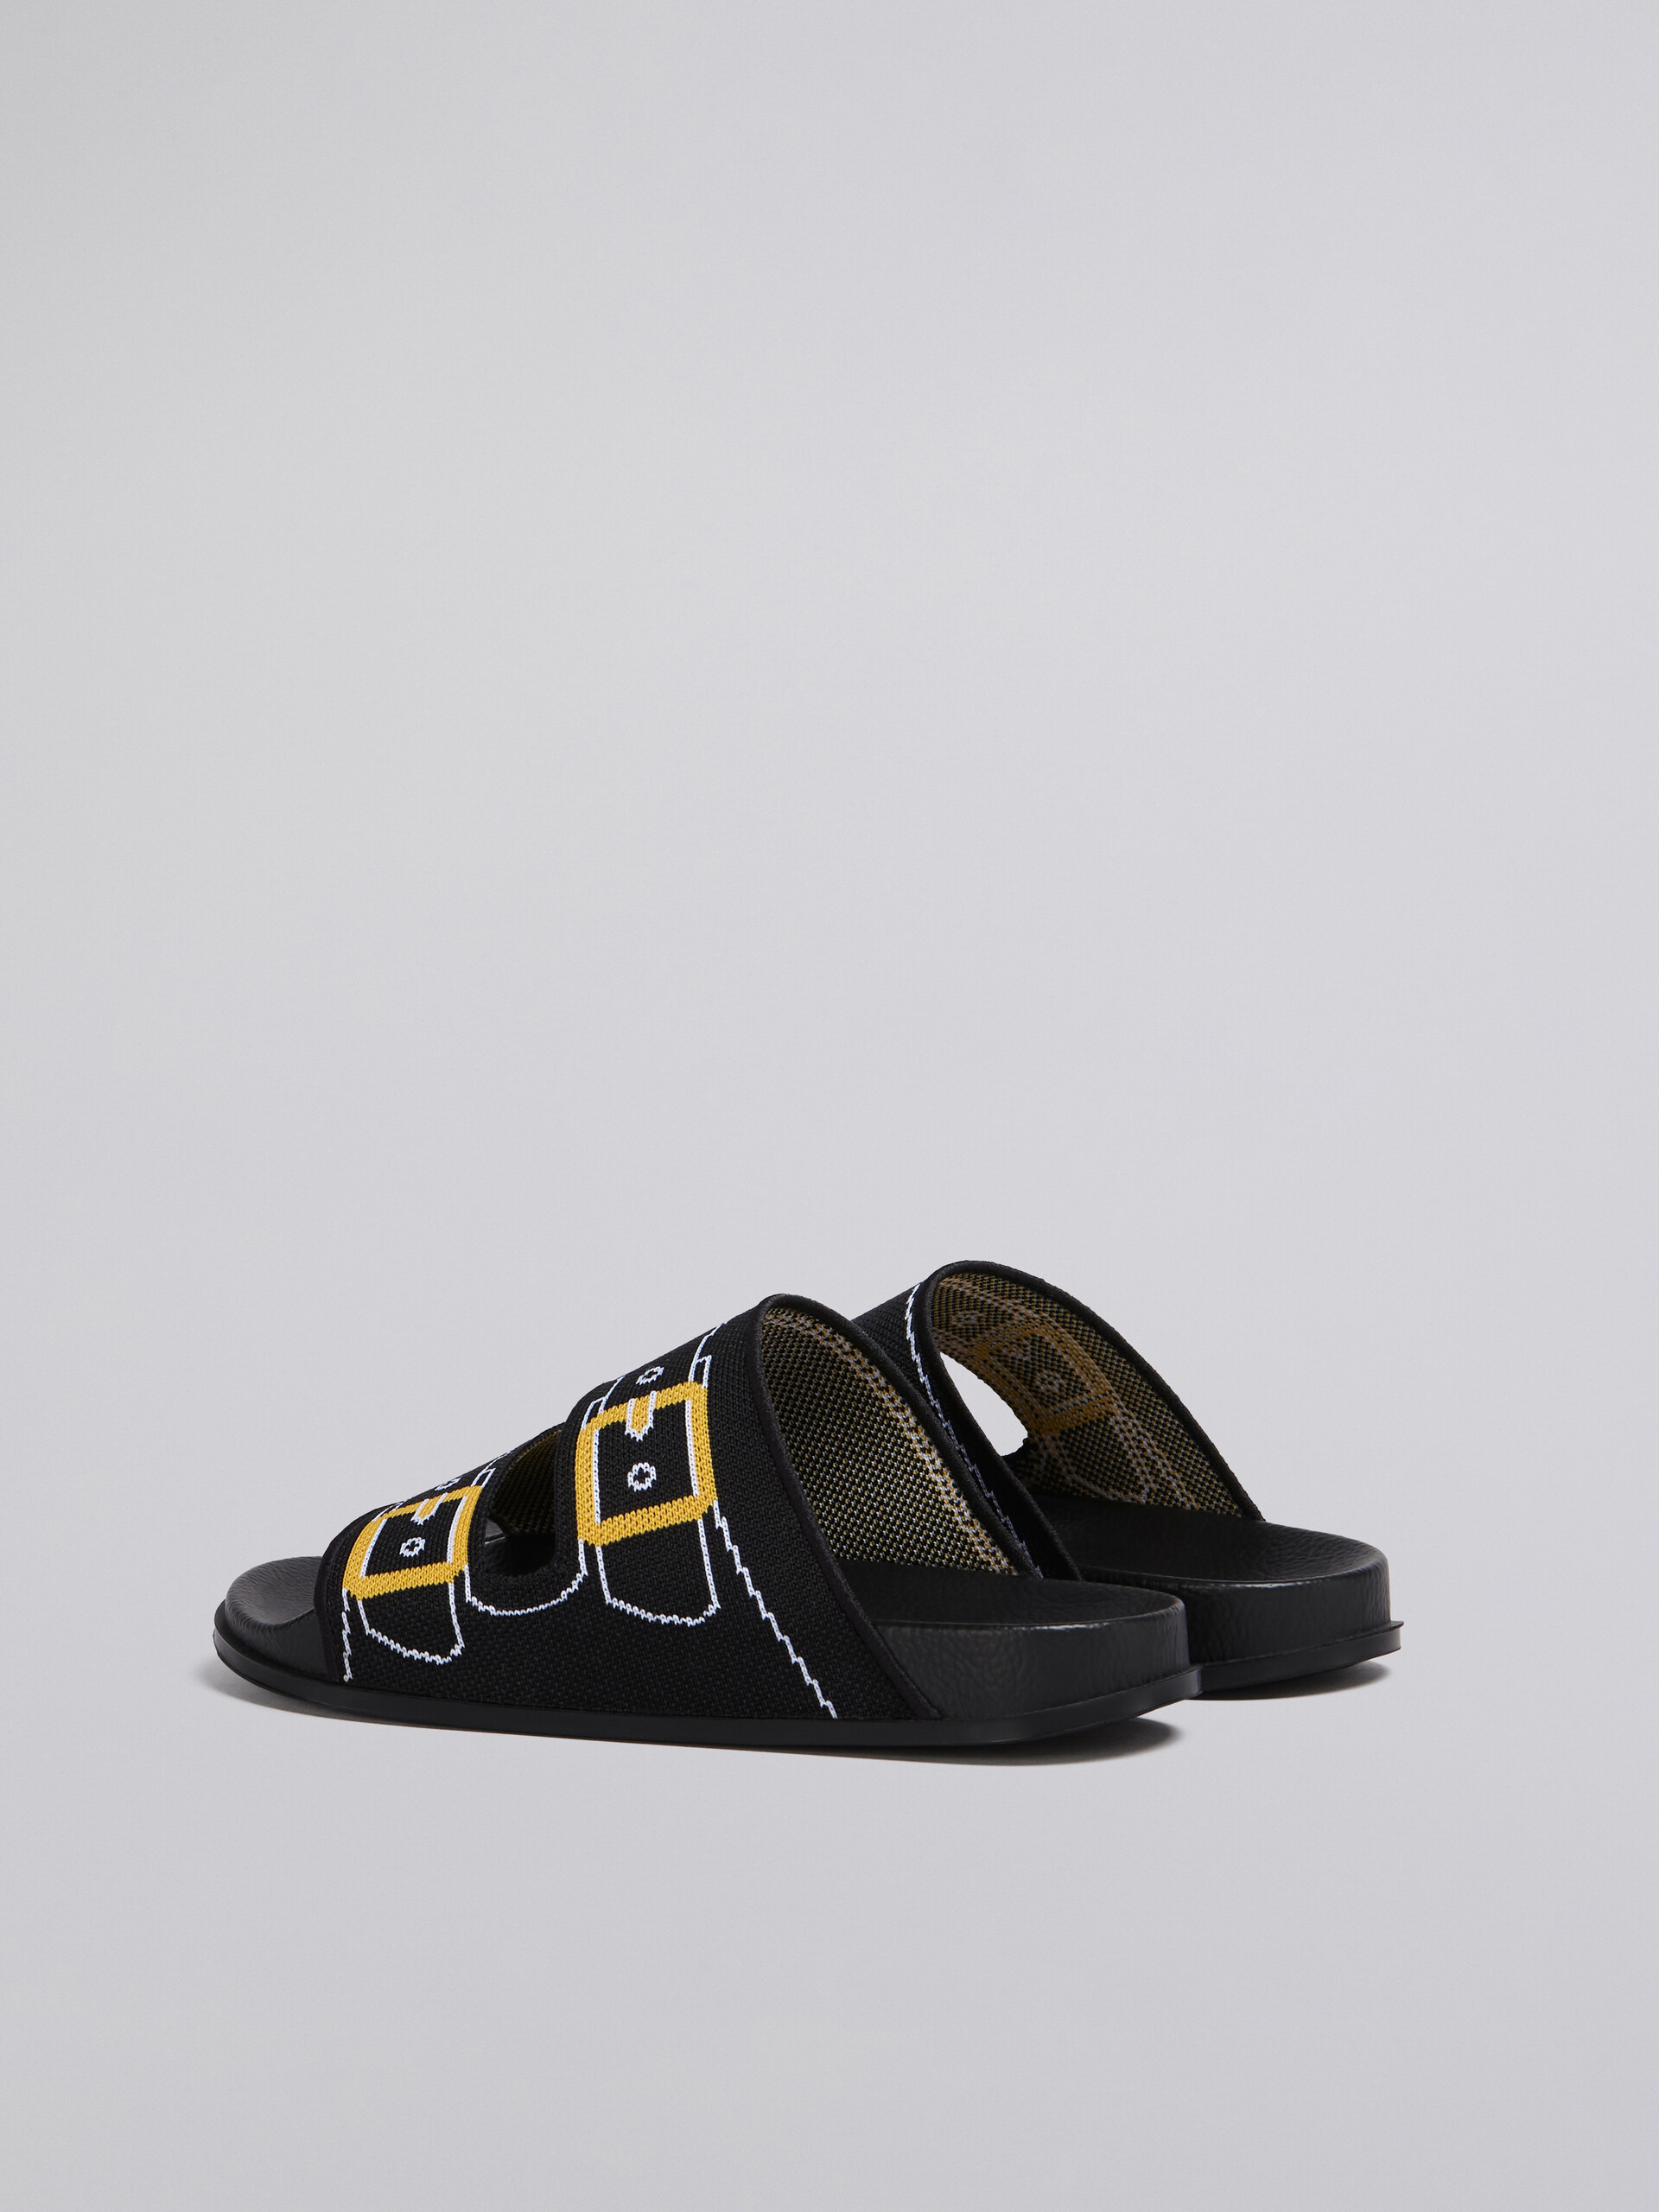 Black and gold trompe l'oeil jacquard two-strap slide - Sandals - Image 3